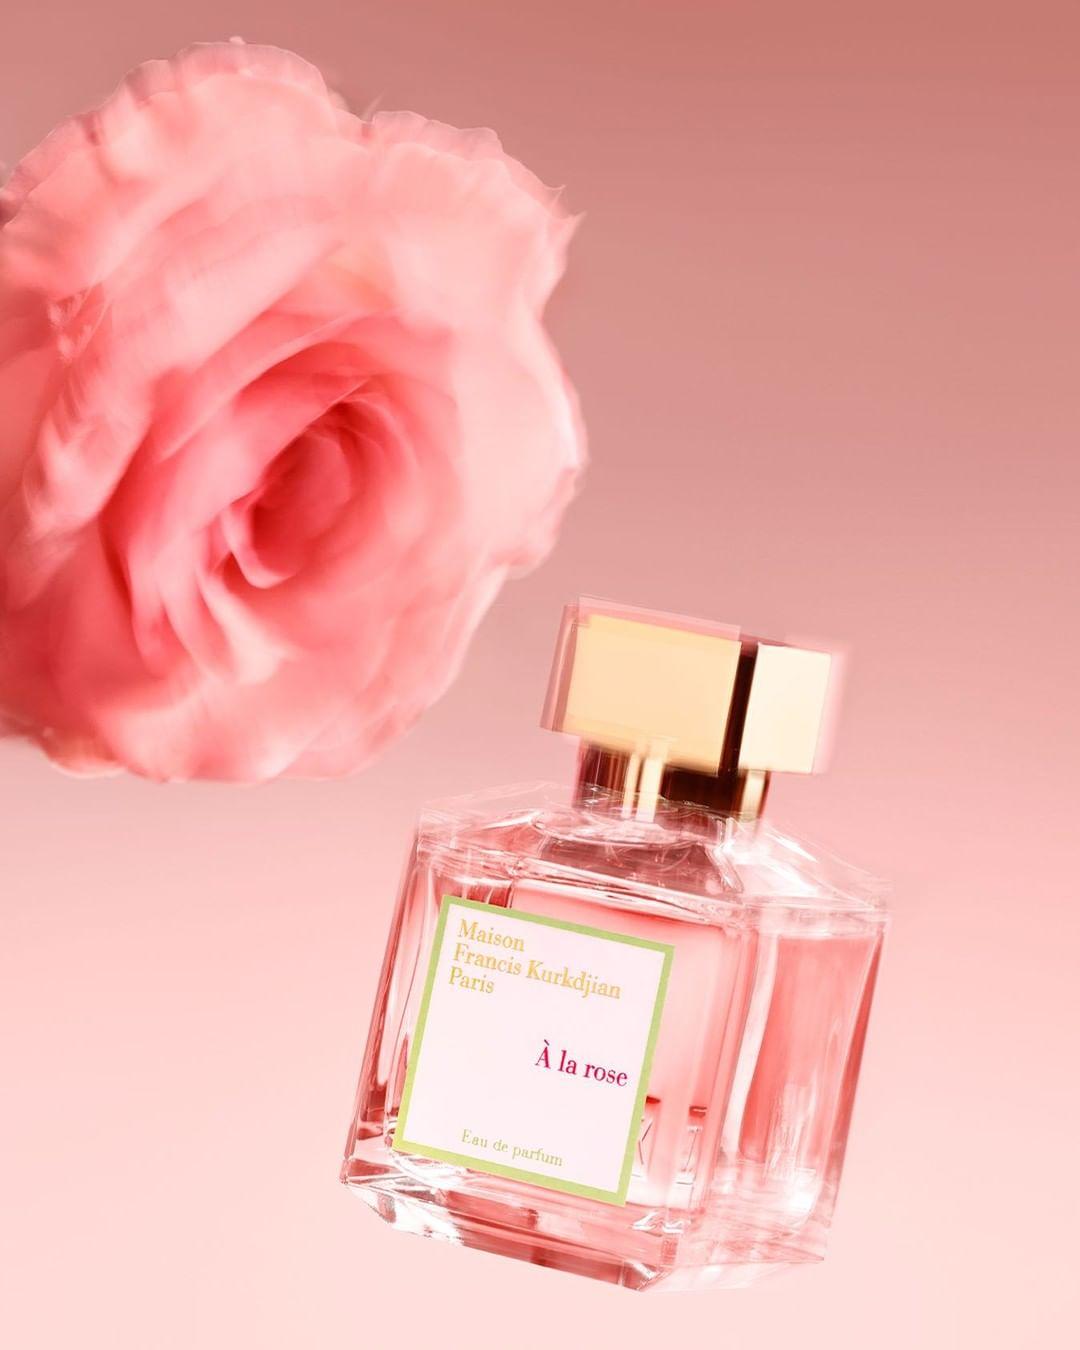 Maison Francis Kurkdjian - A la rose | Perfume Lounge